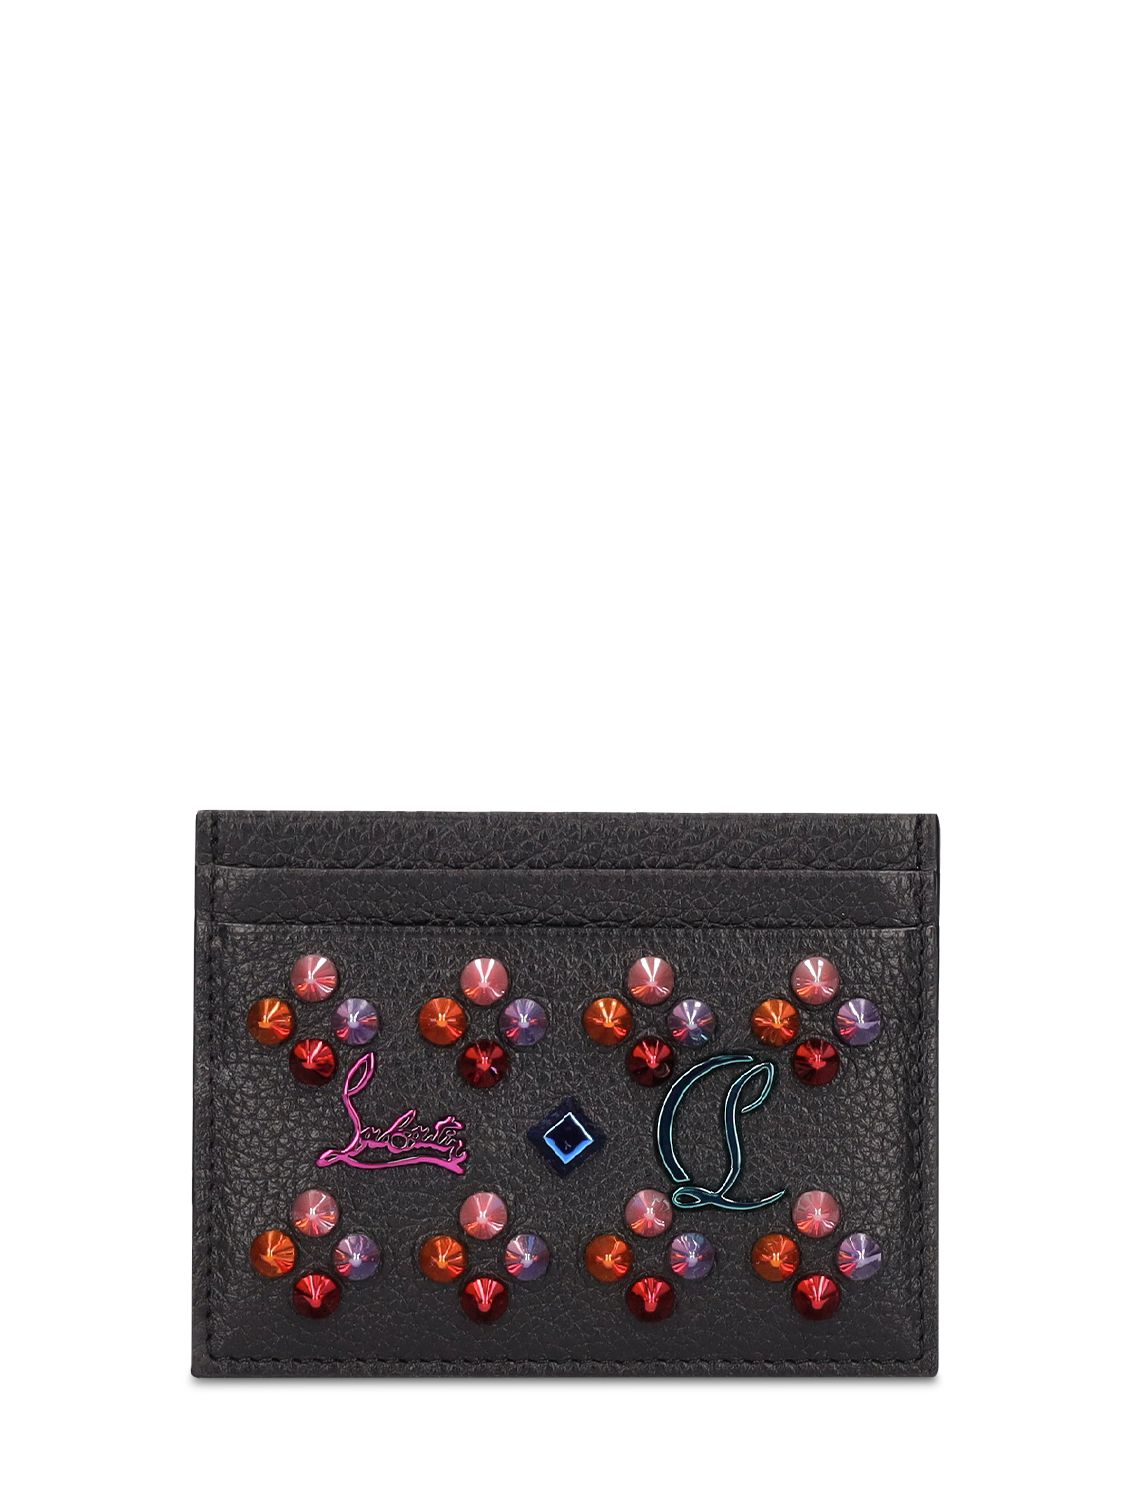 W Kios Embellished Leather Card Holder